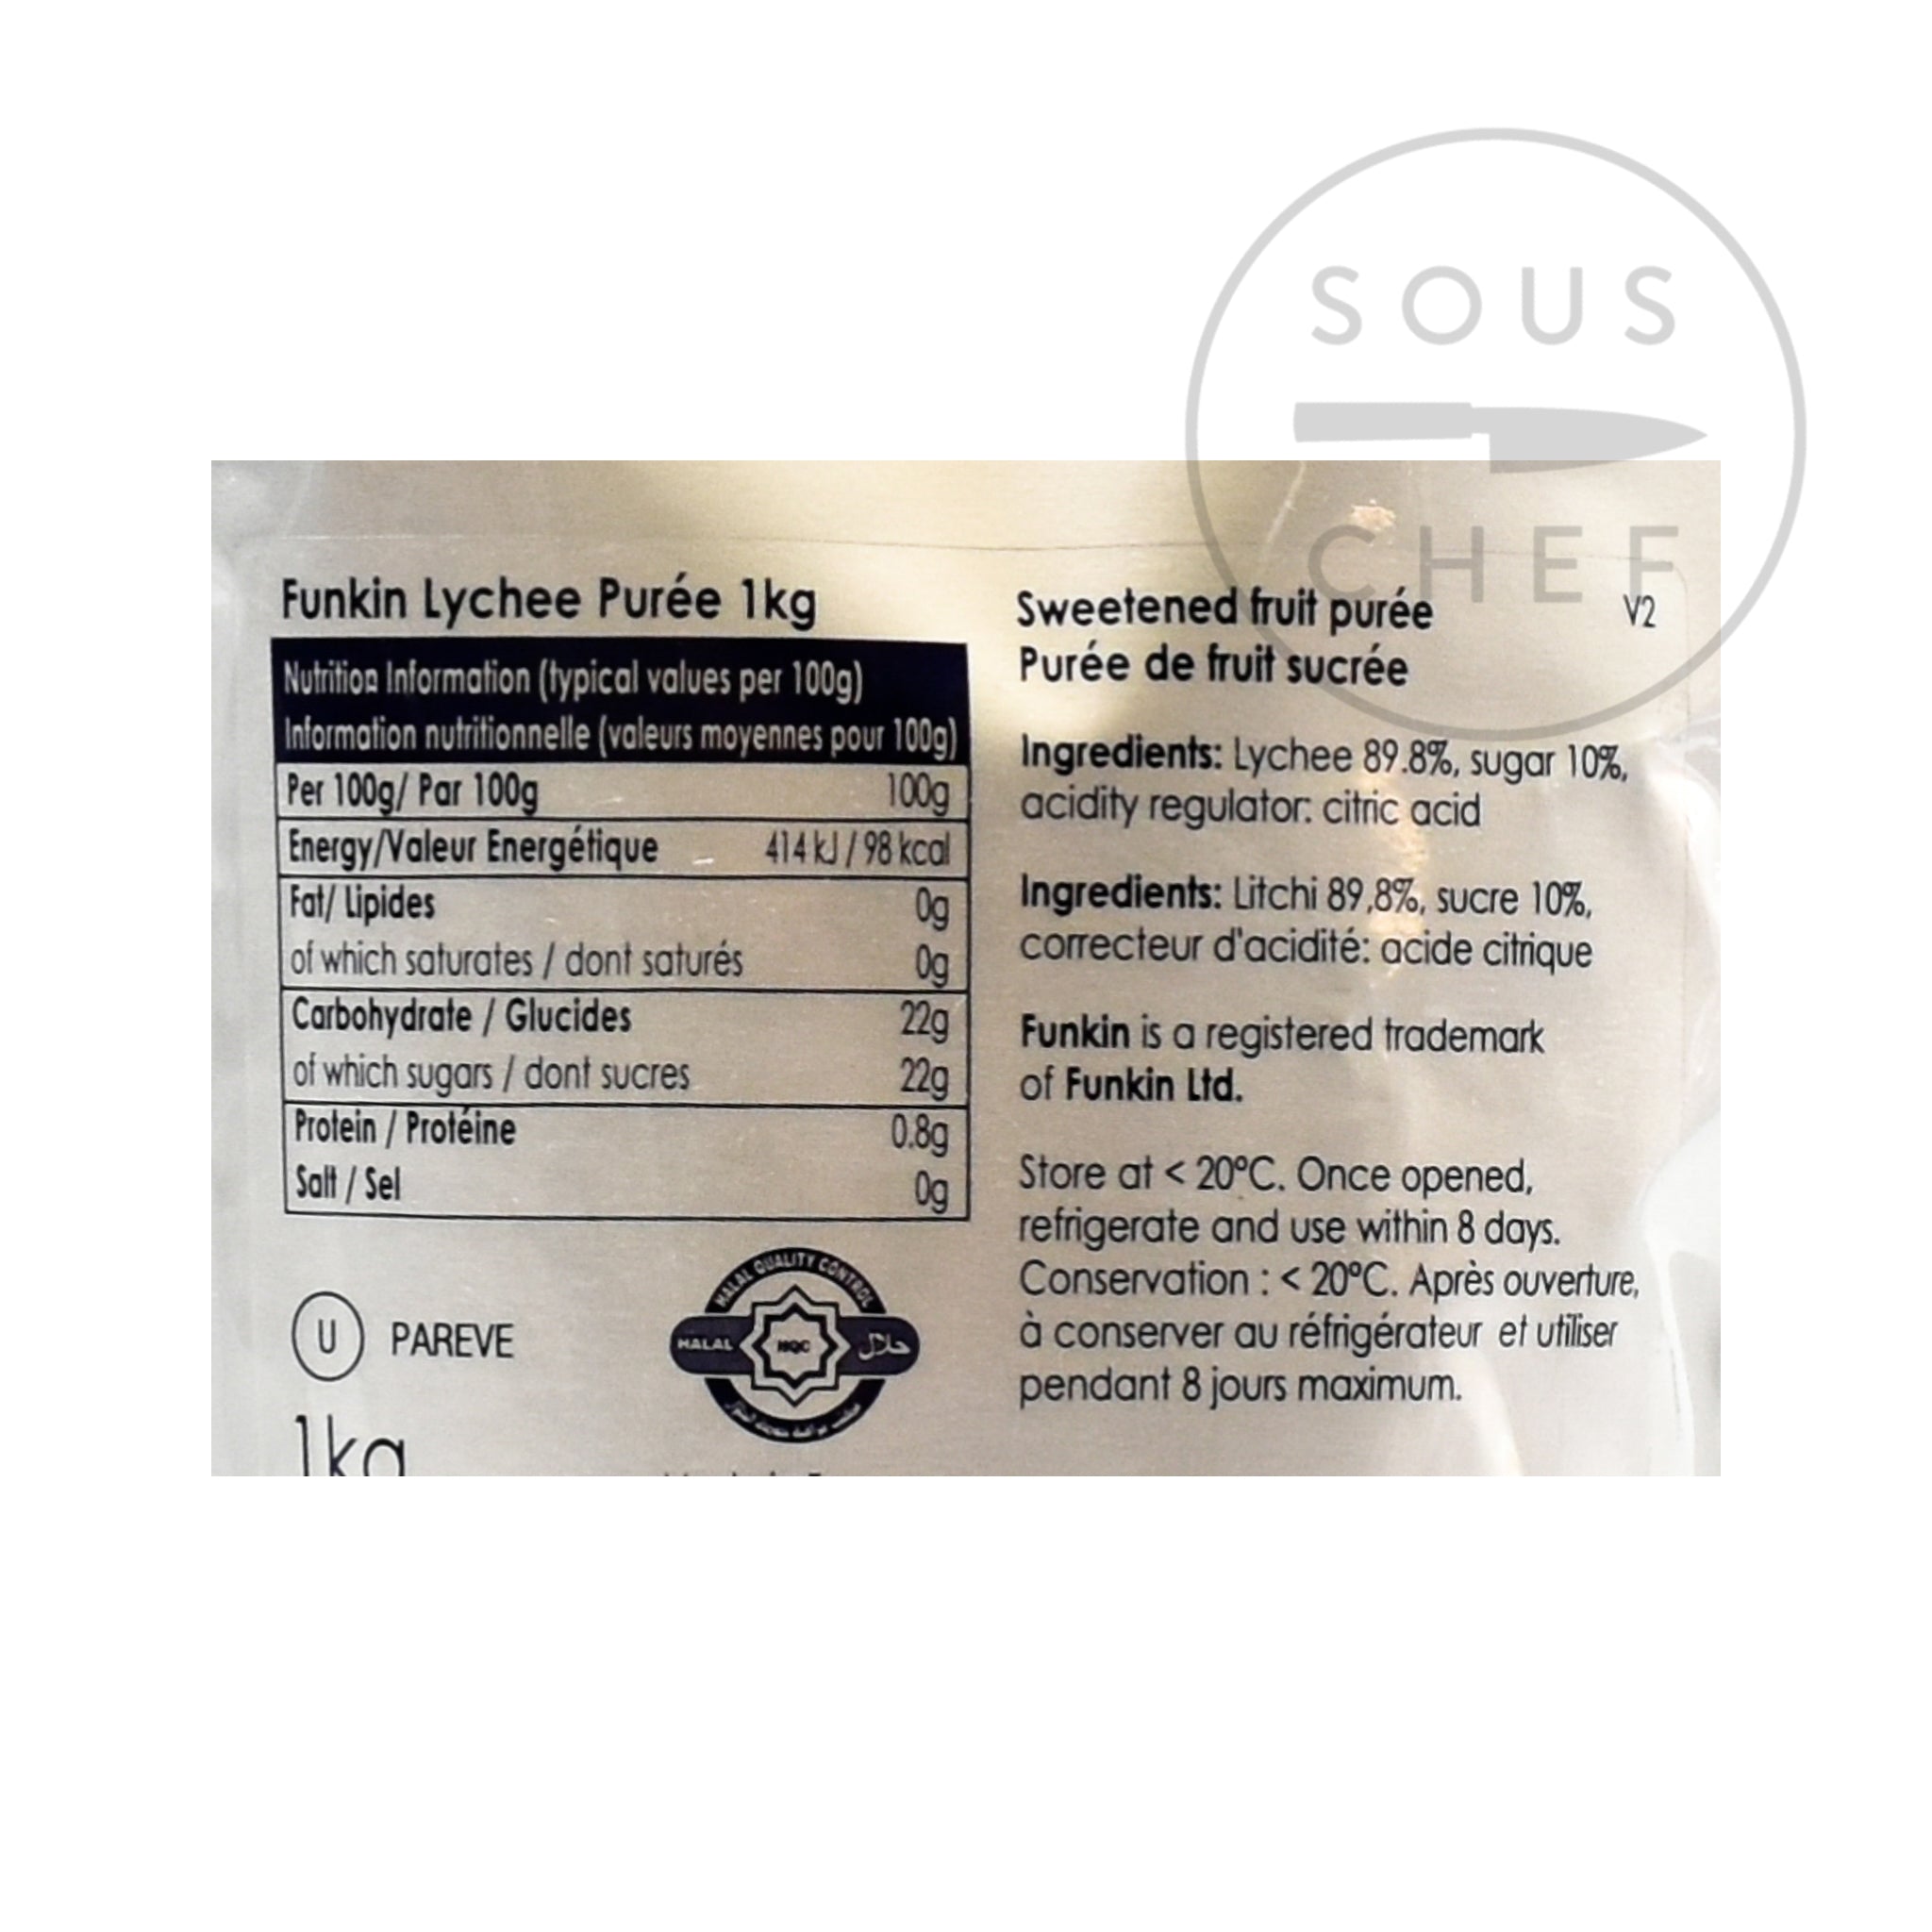 Funkin Lychee Puree 1kg nutritional information ingredients